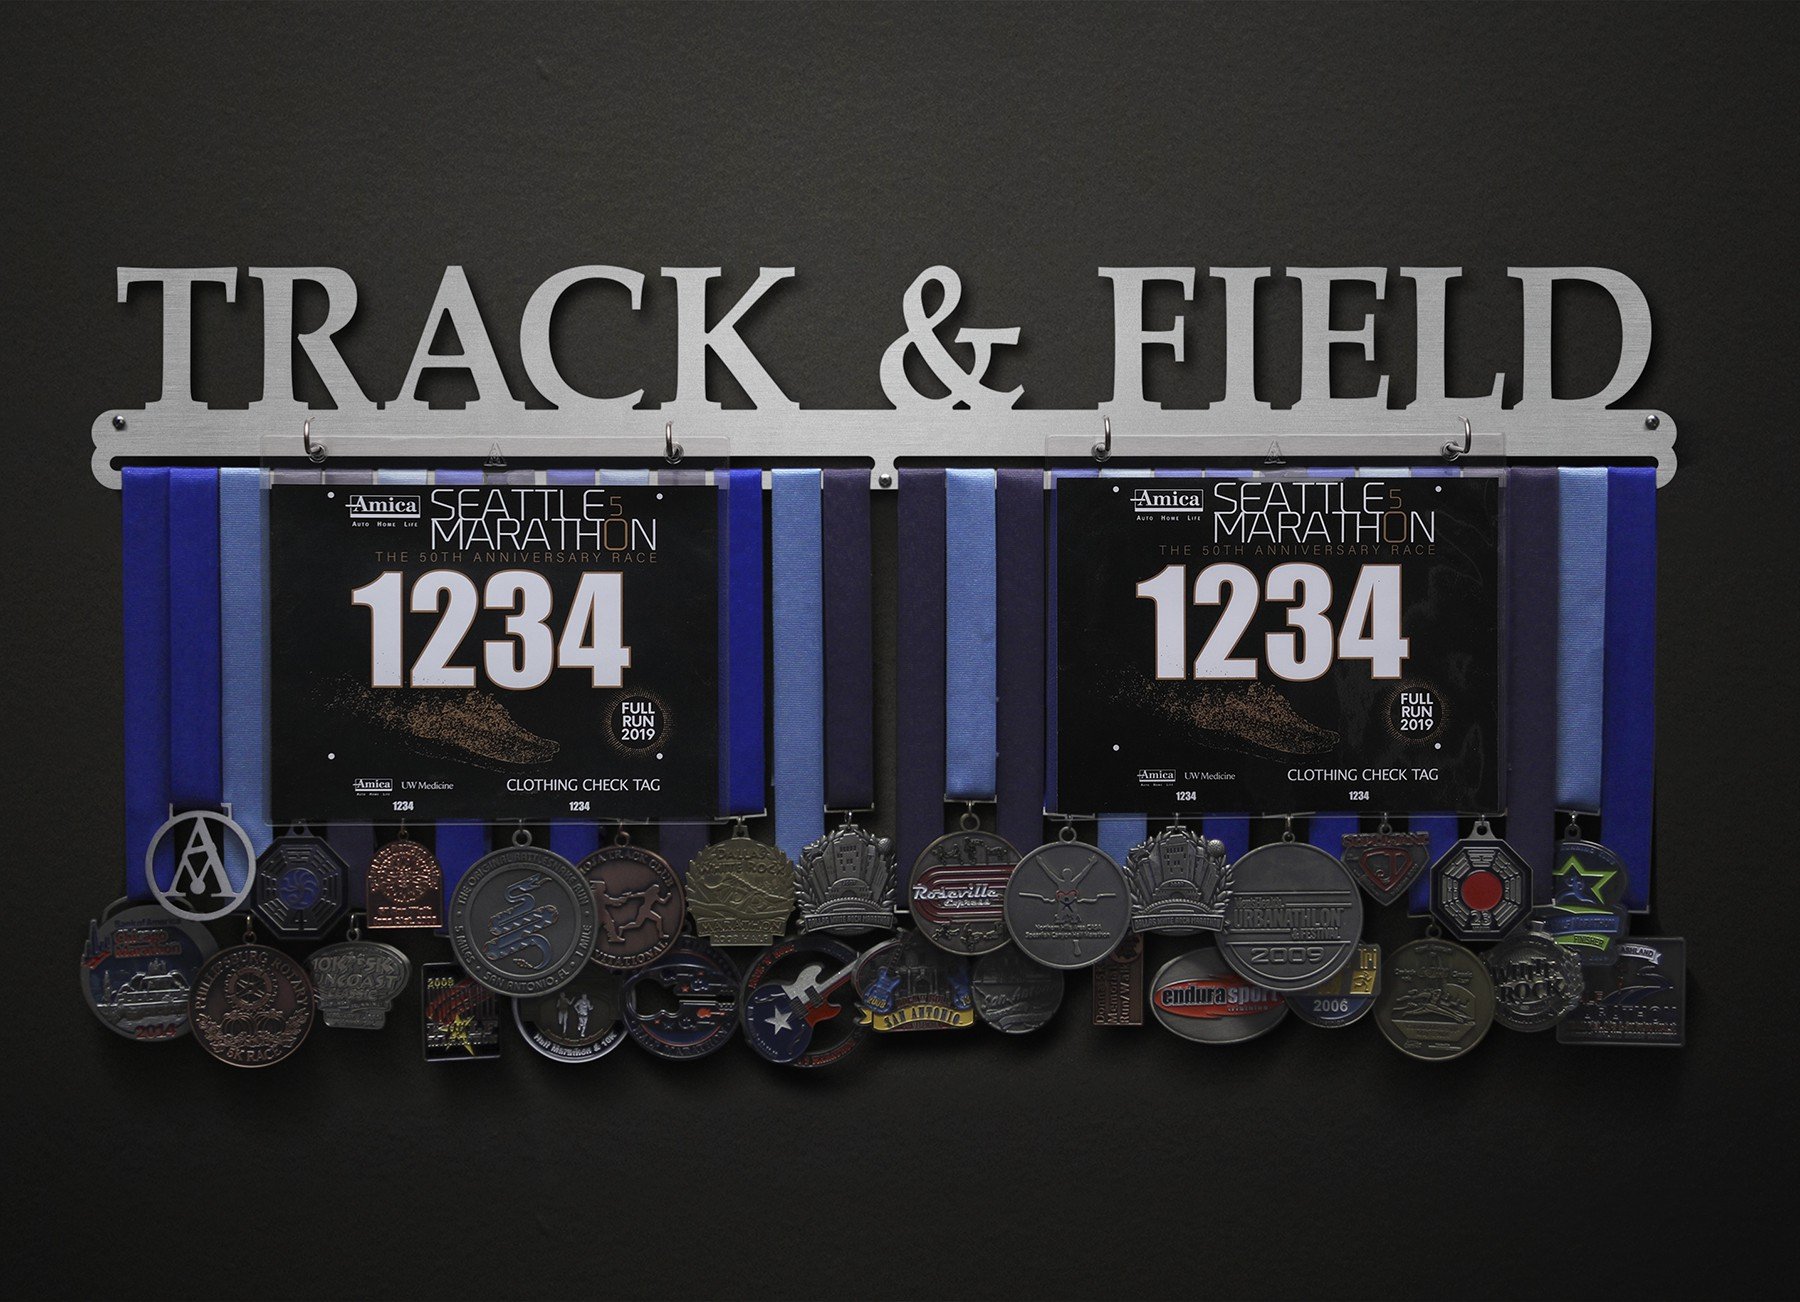 Track & Field Bib and Medal Display